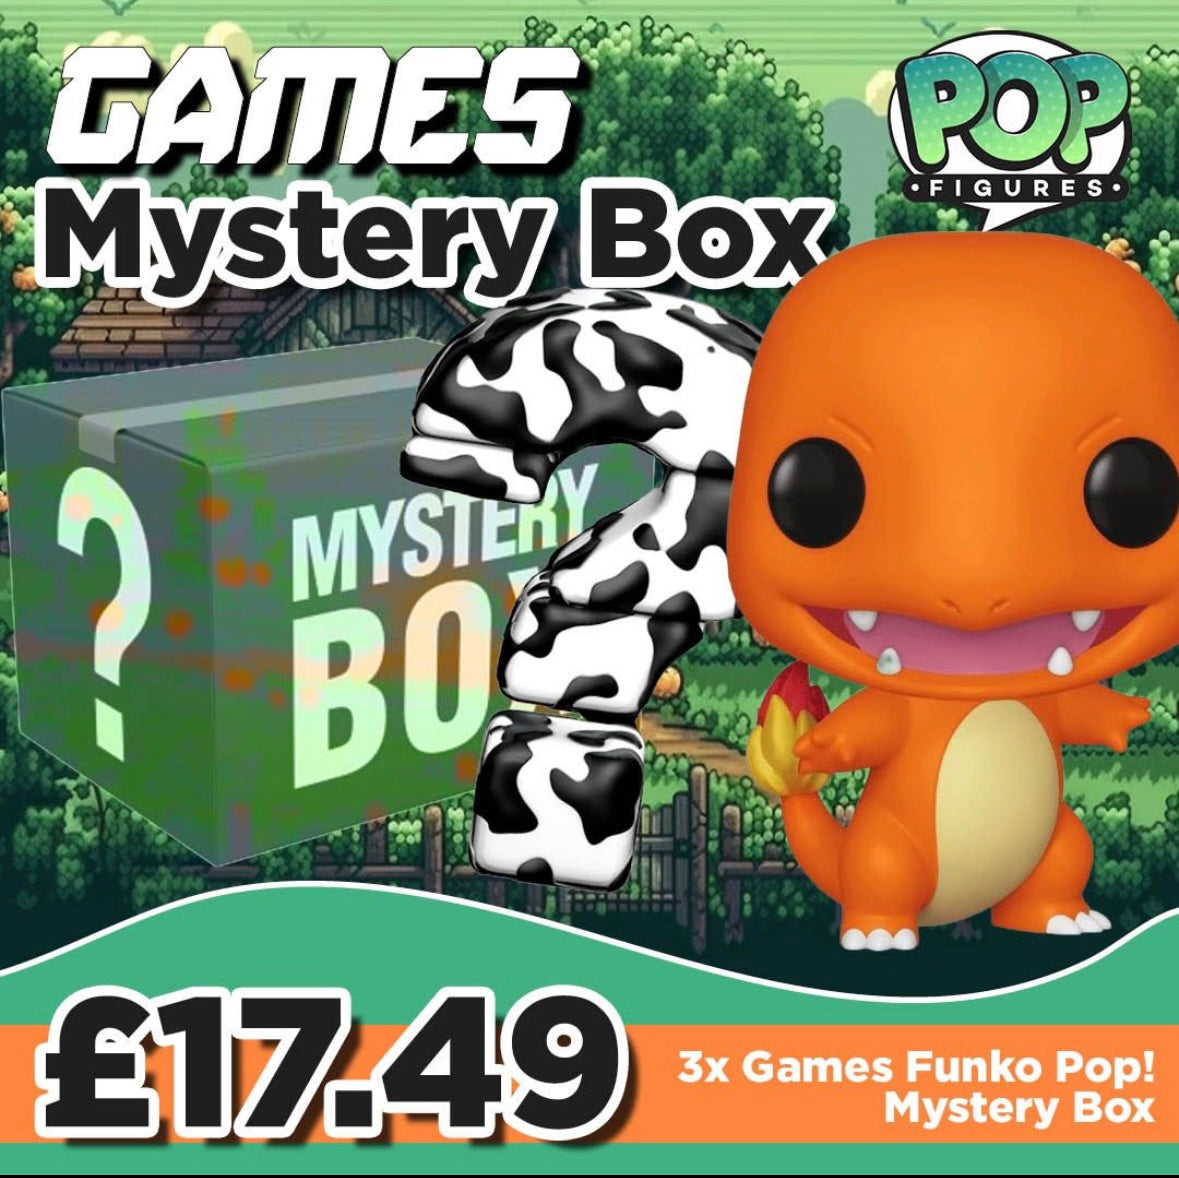 3 Games Funko Pop Mystery Box!